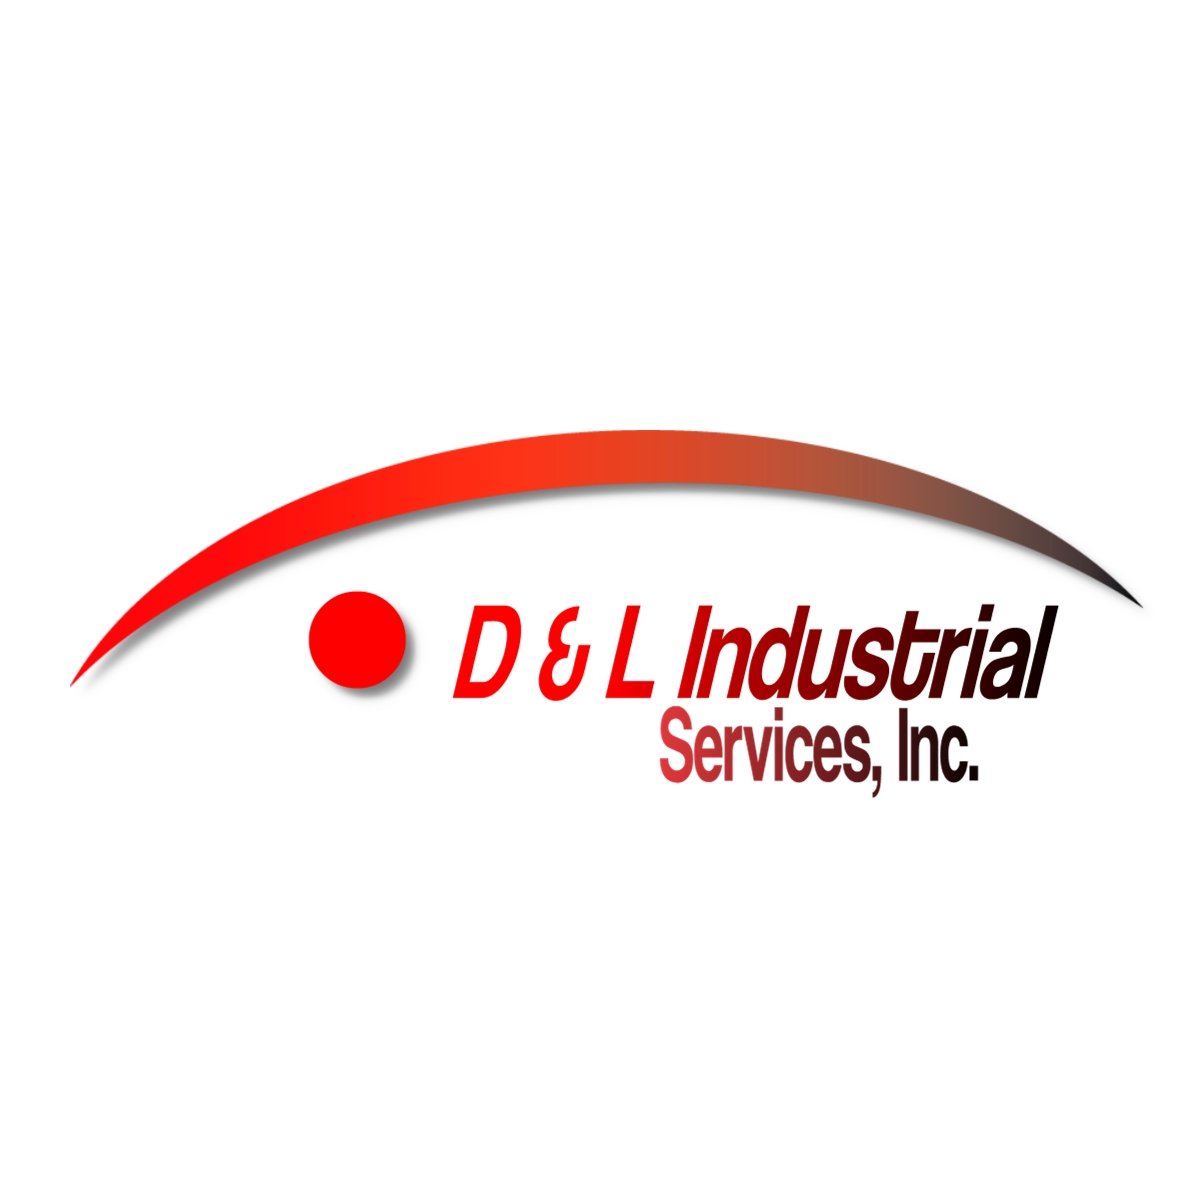 D & L Industrial Services, Inc.